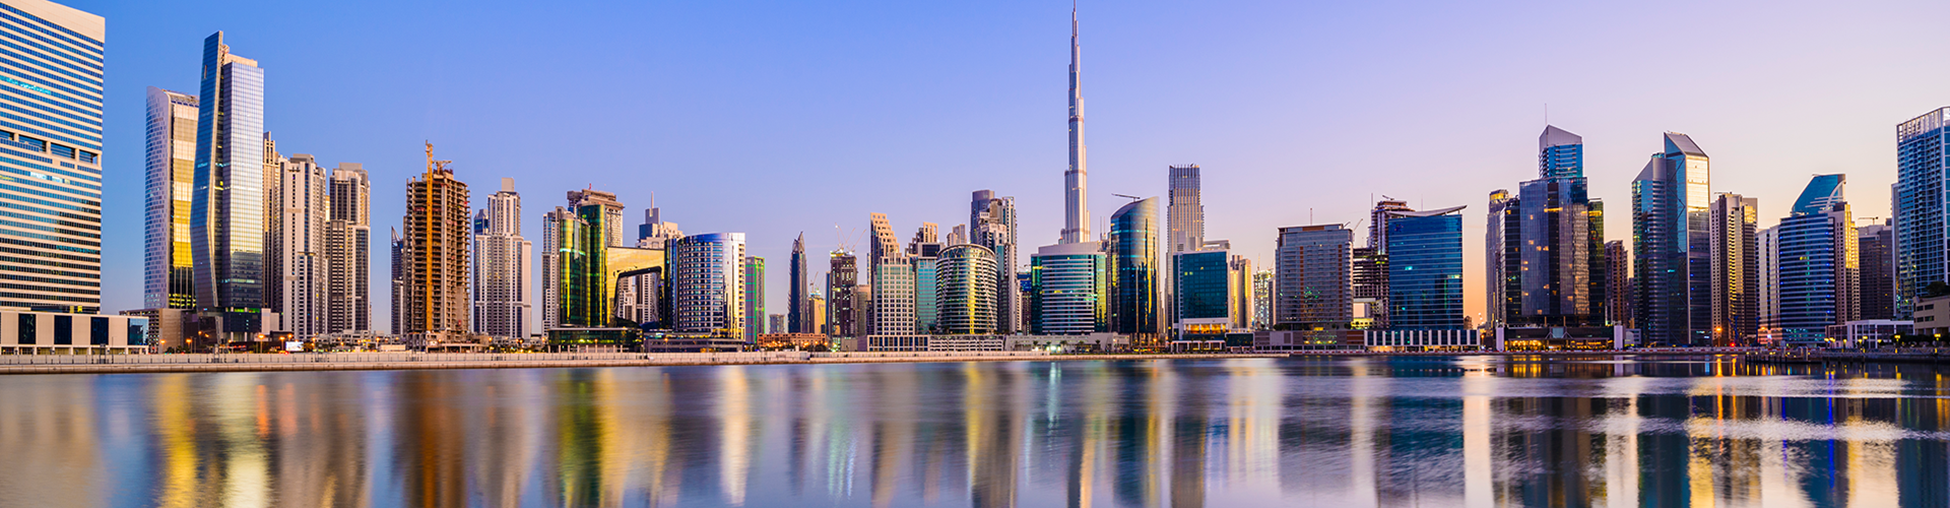 Dubai Skyline GettyImages-1205529297 1920x500 72